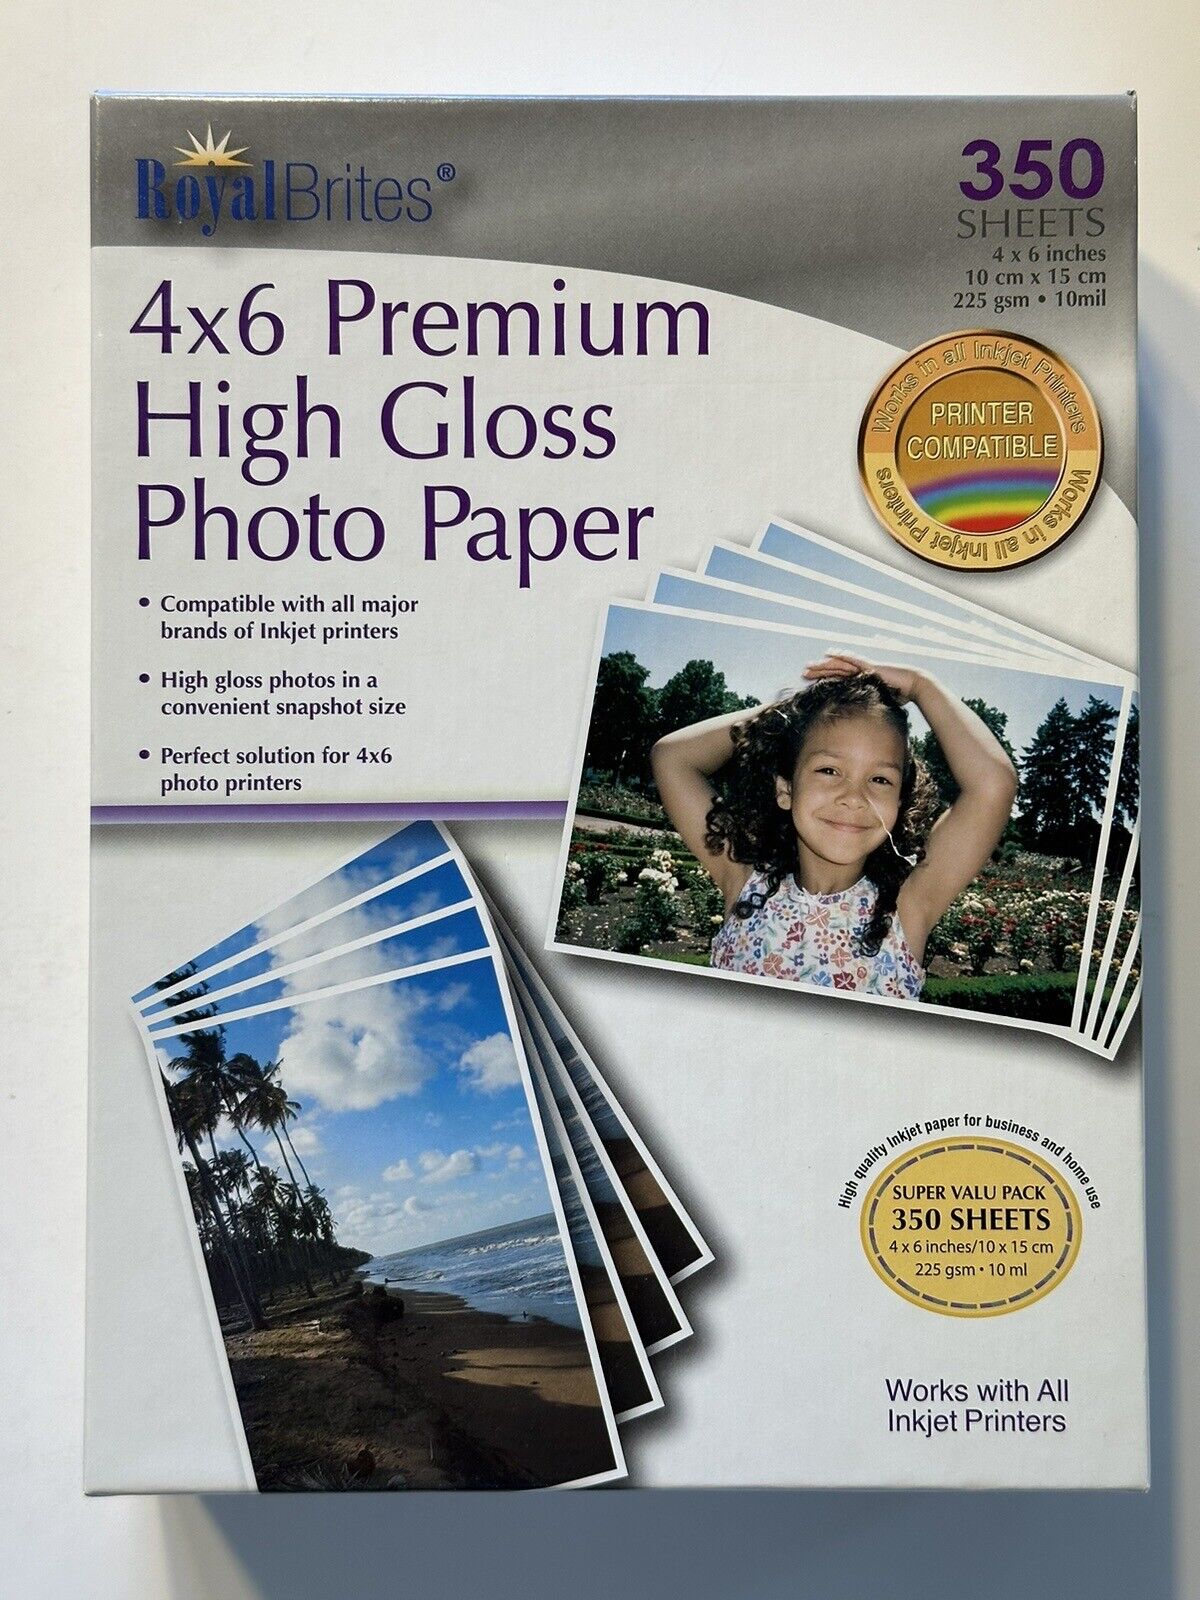 Royal Brites 4x6 Premium High Gloss Photo Paper - Partial Box W/ Over 200 Left